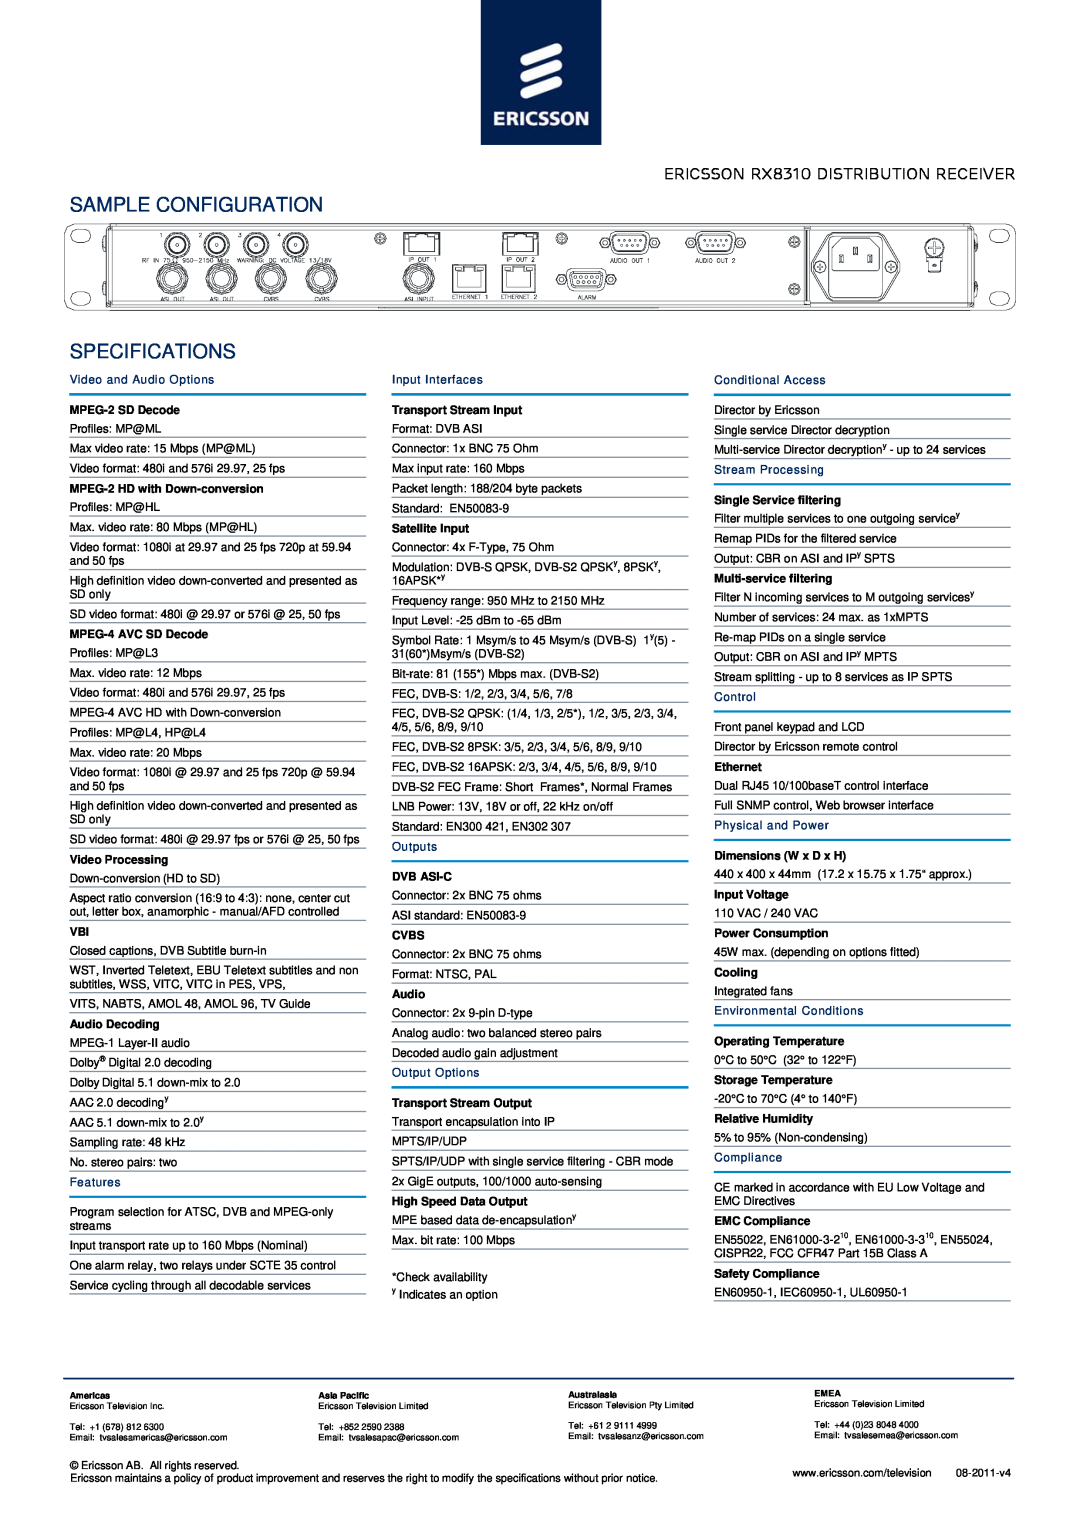 Ericsson manual Sample Configuration, Specifications, Ericsson RX8310 Distribution Receiver 